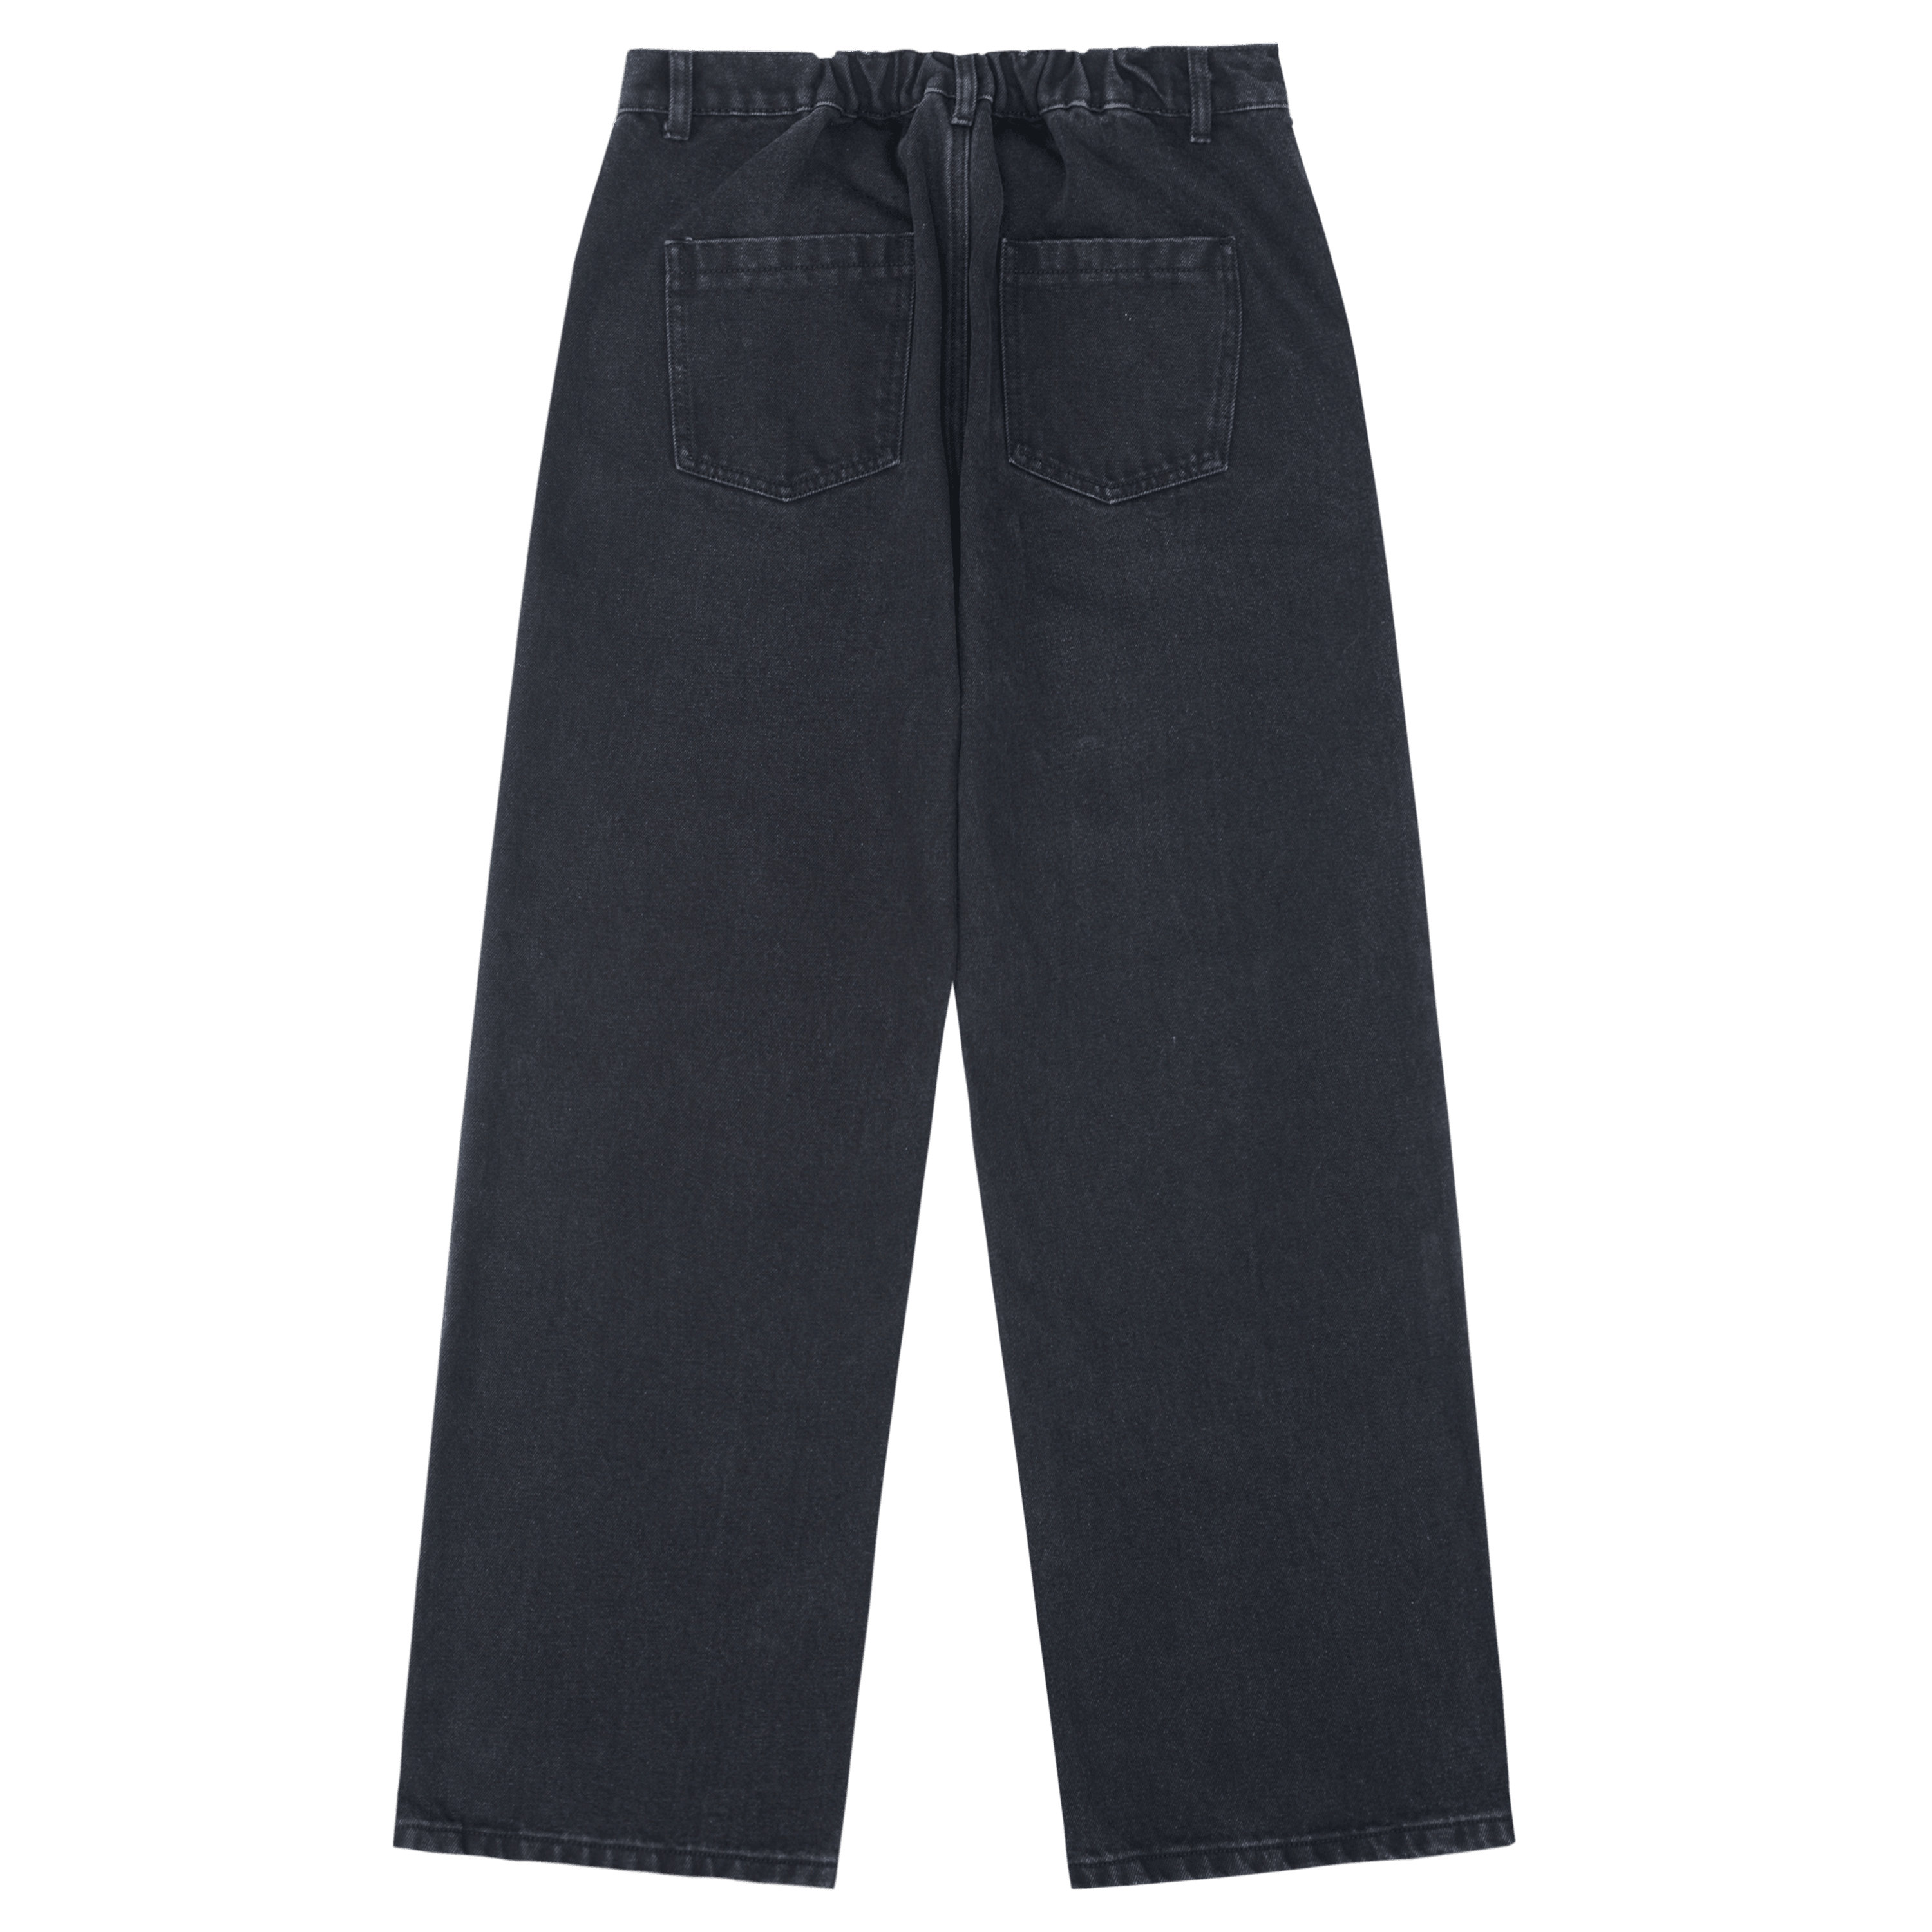 TAKA ORIGINAL LIMITED - TAKA Original [Eternet 002] butterfly jeans